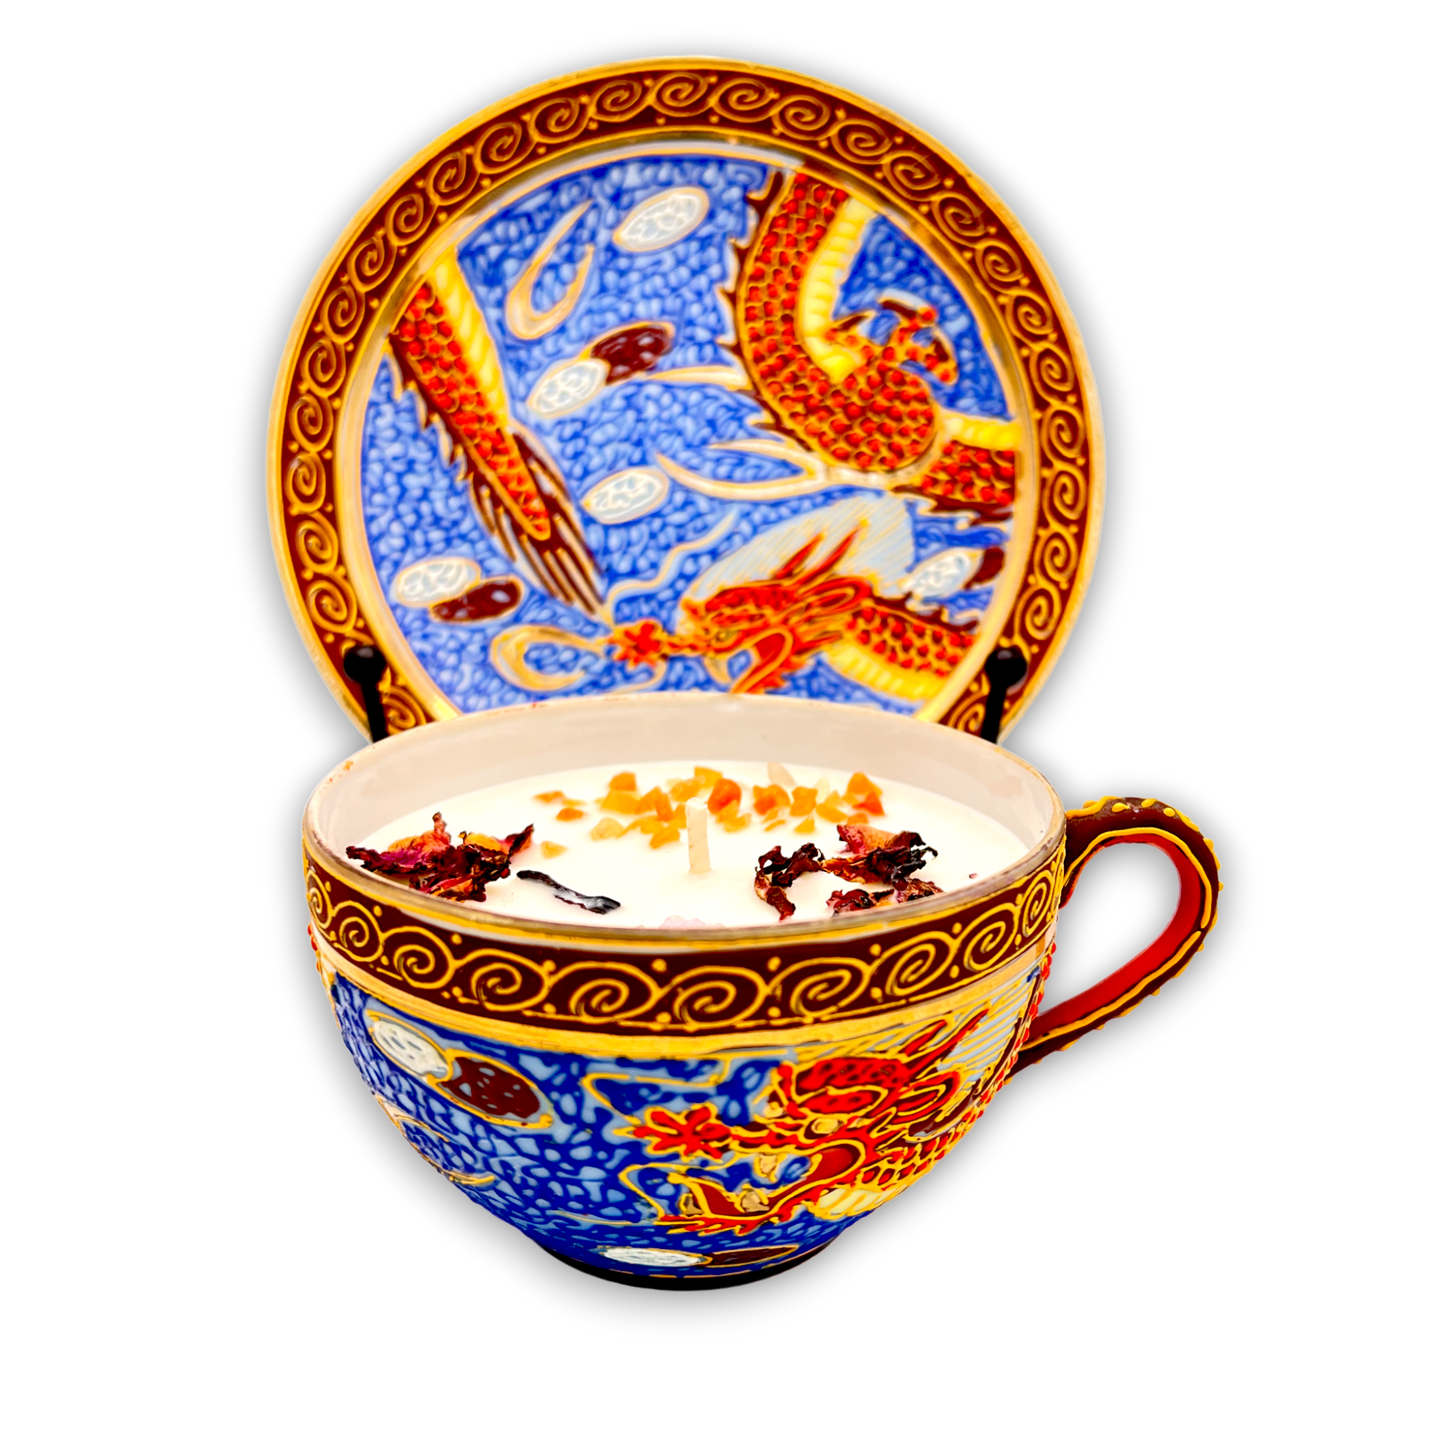 Japanese Rising Dragon Vintage Teacup Candle